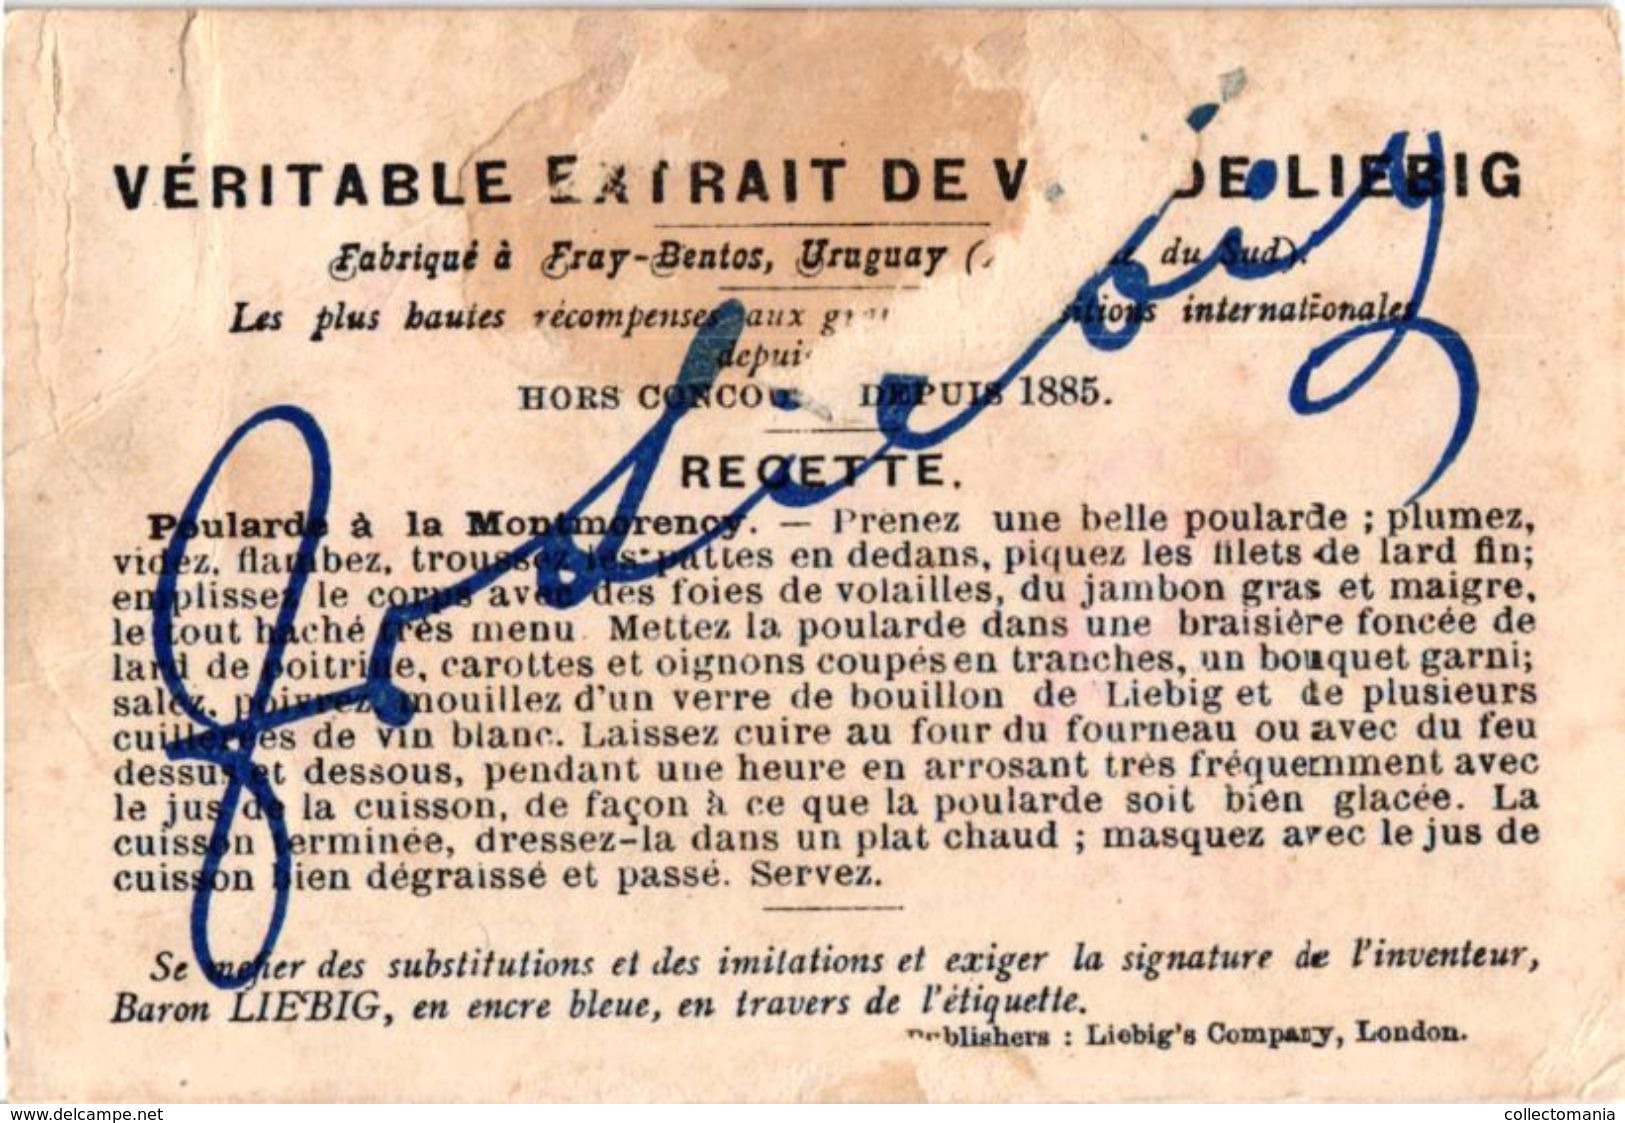 6 cards complete set number  180 Compagnie Liebig circa1883 RARE, litho, la farce de MAITRE PATHELIN